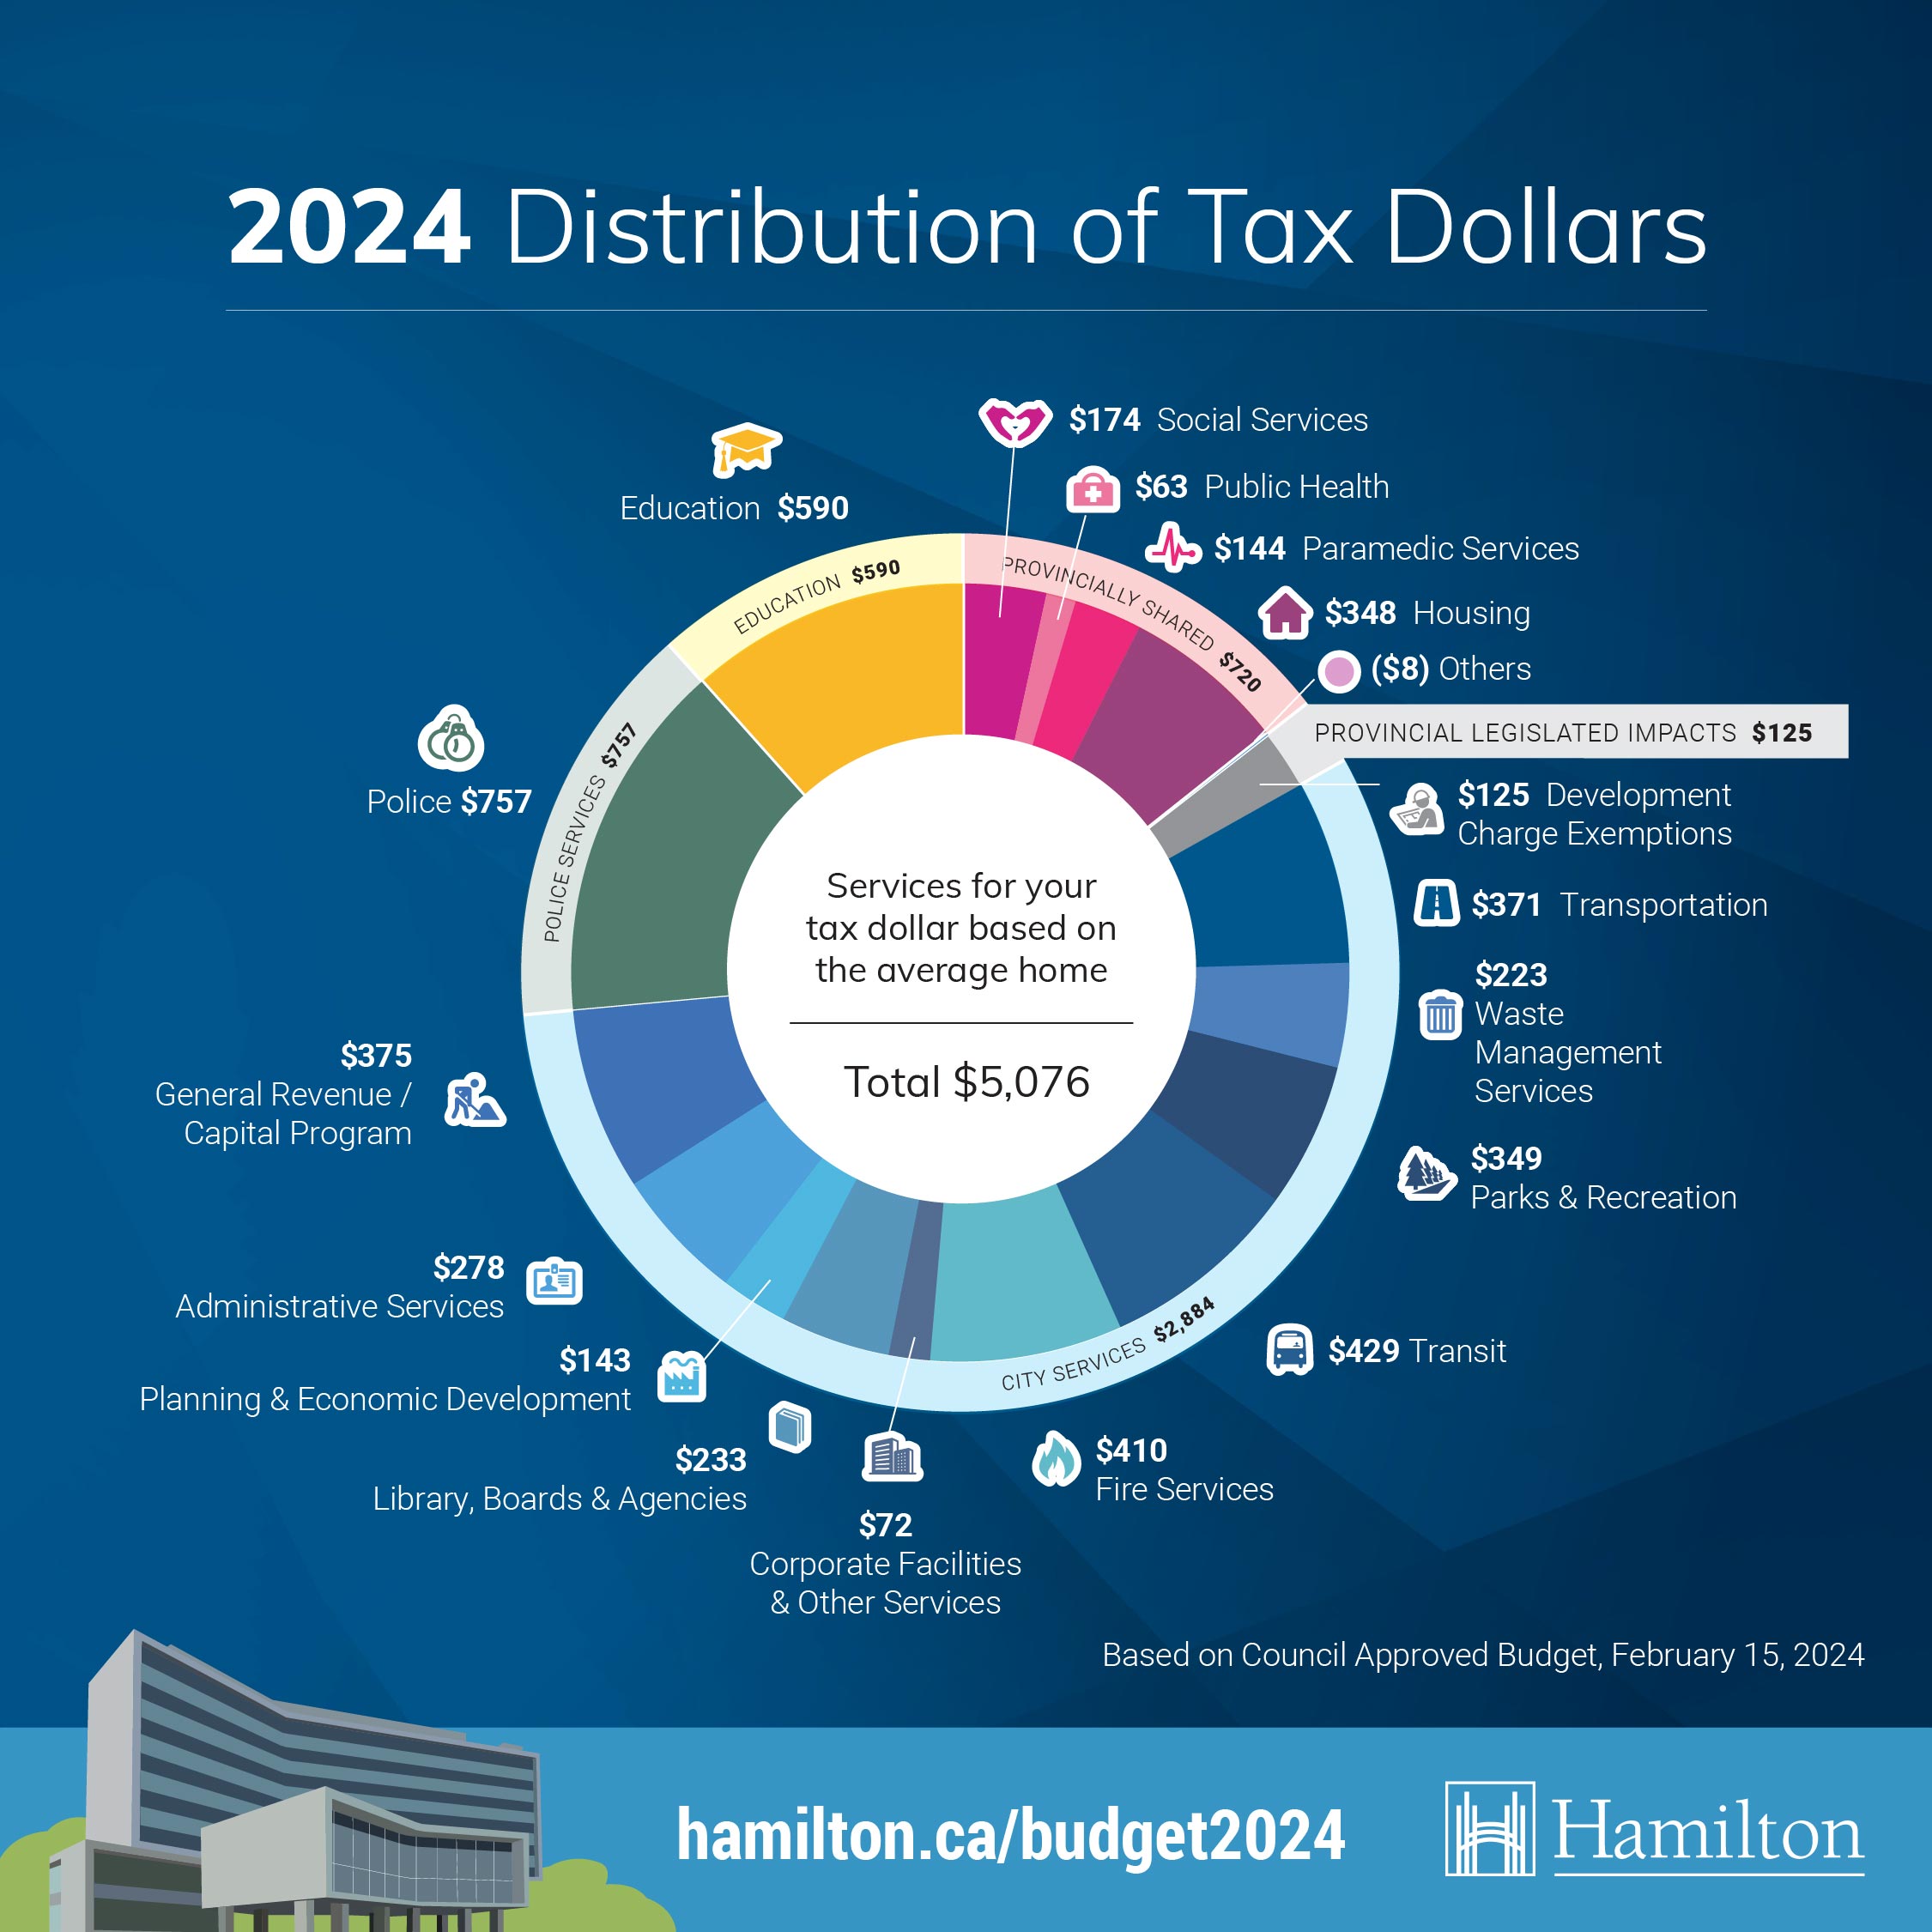 2024 Distribution of Tax Dollars chart. Full description below.